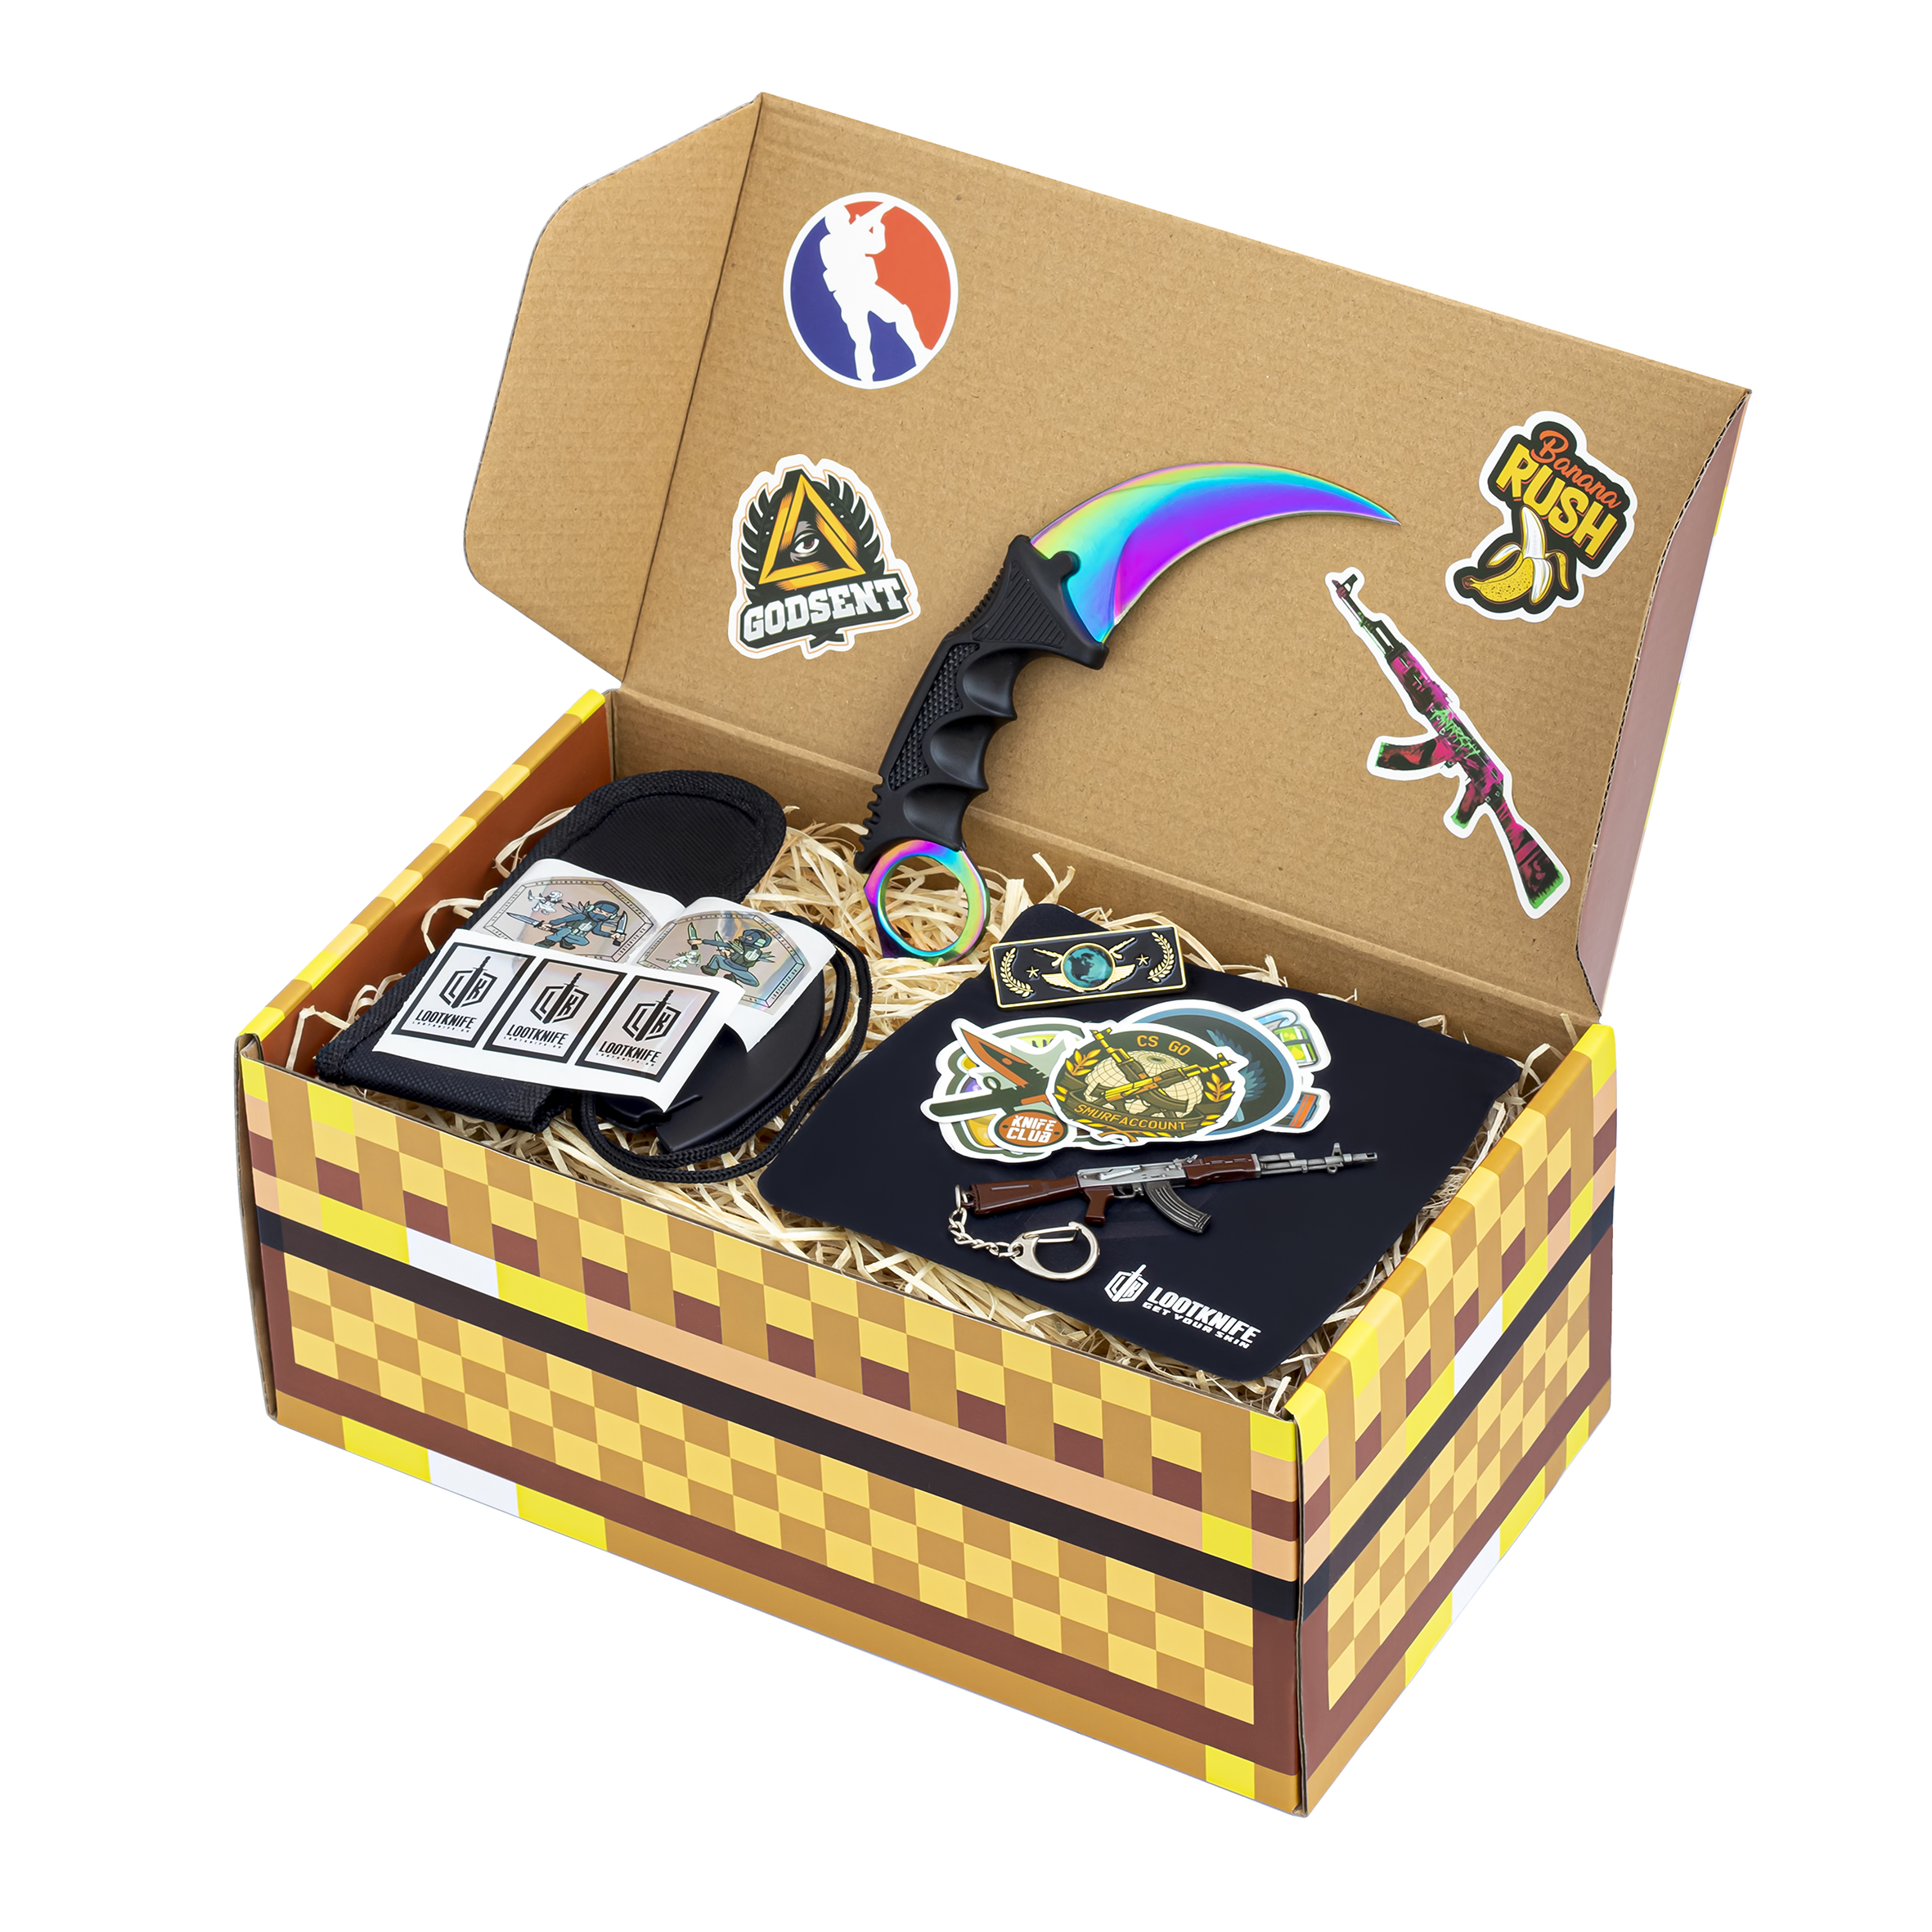 CS2 Platinum Mystery Box made by LootKnife